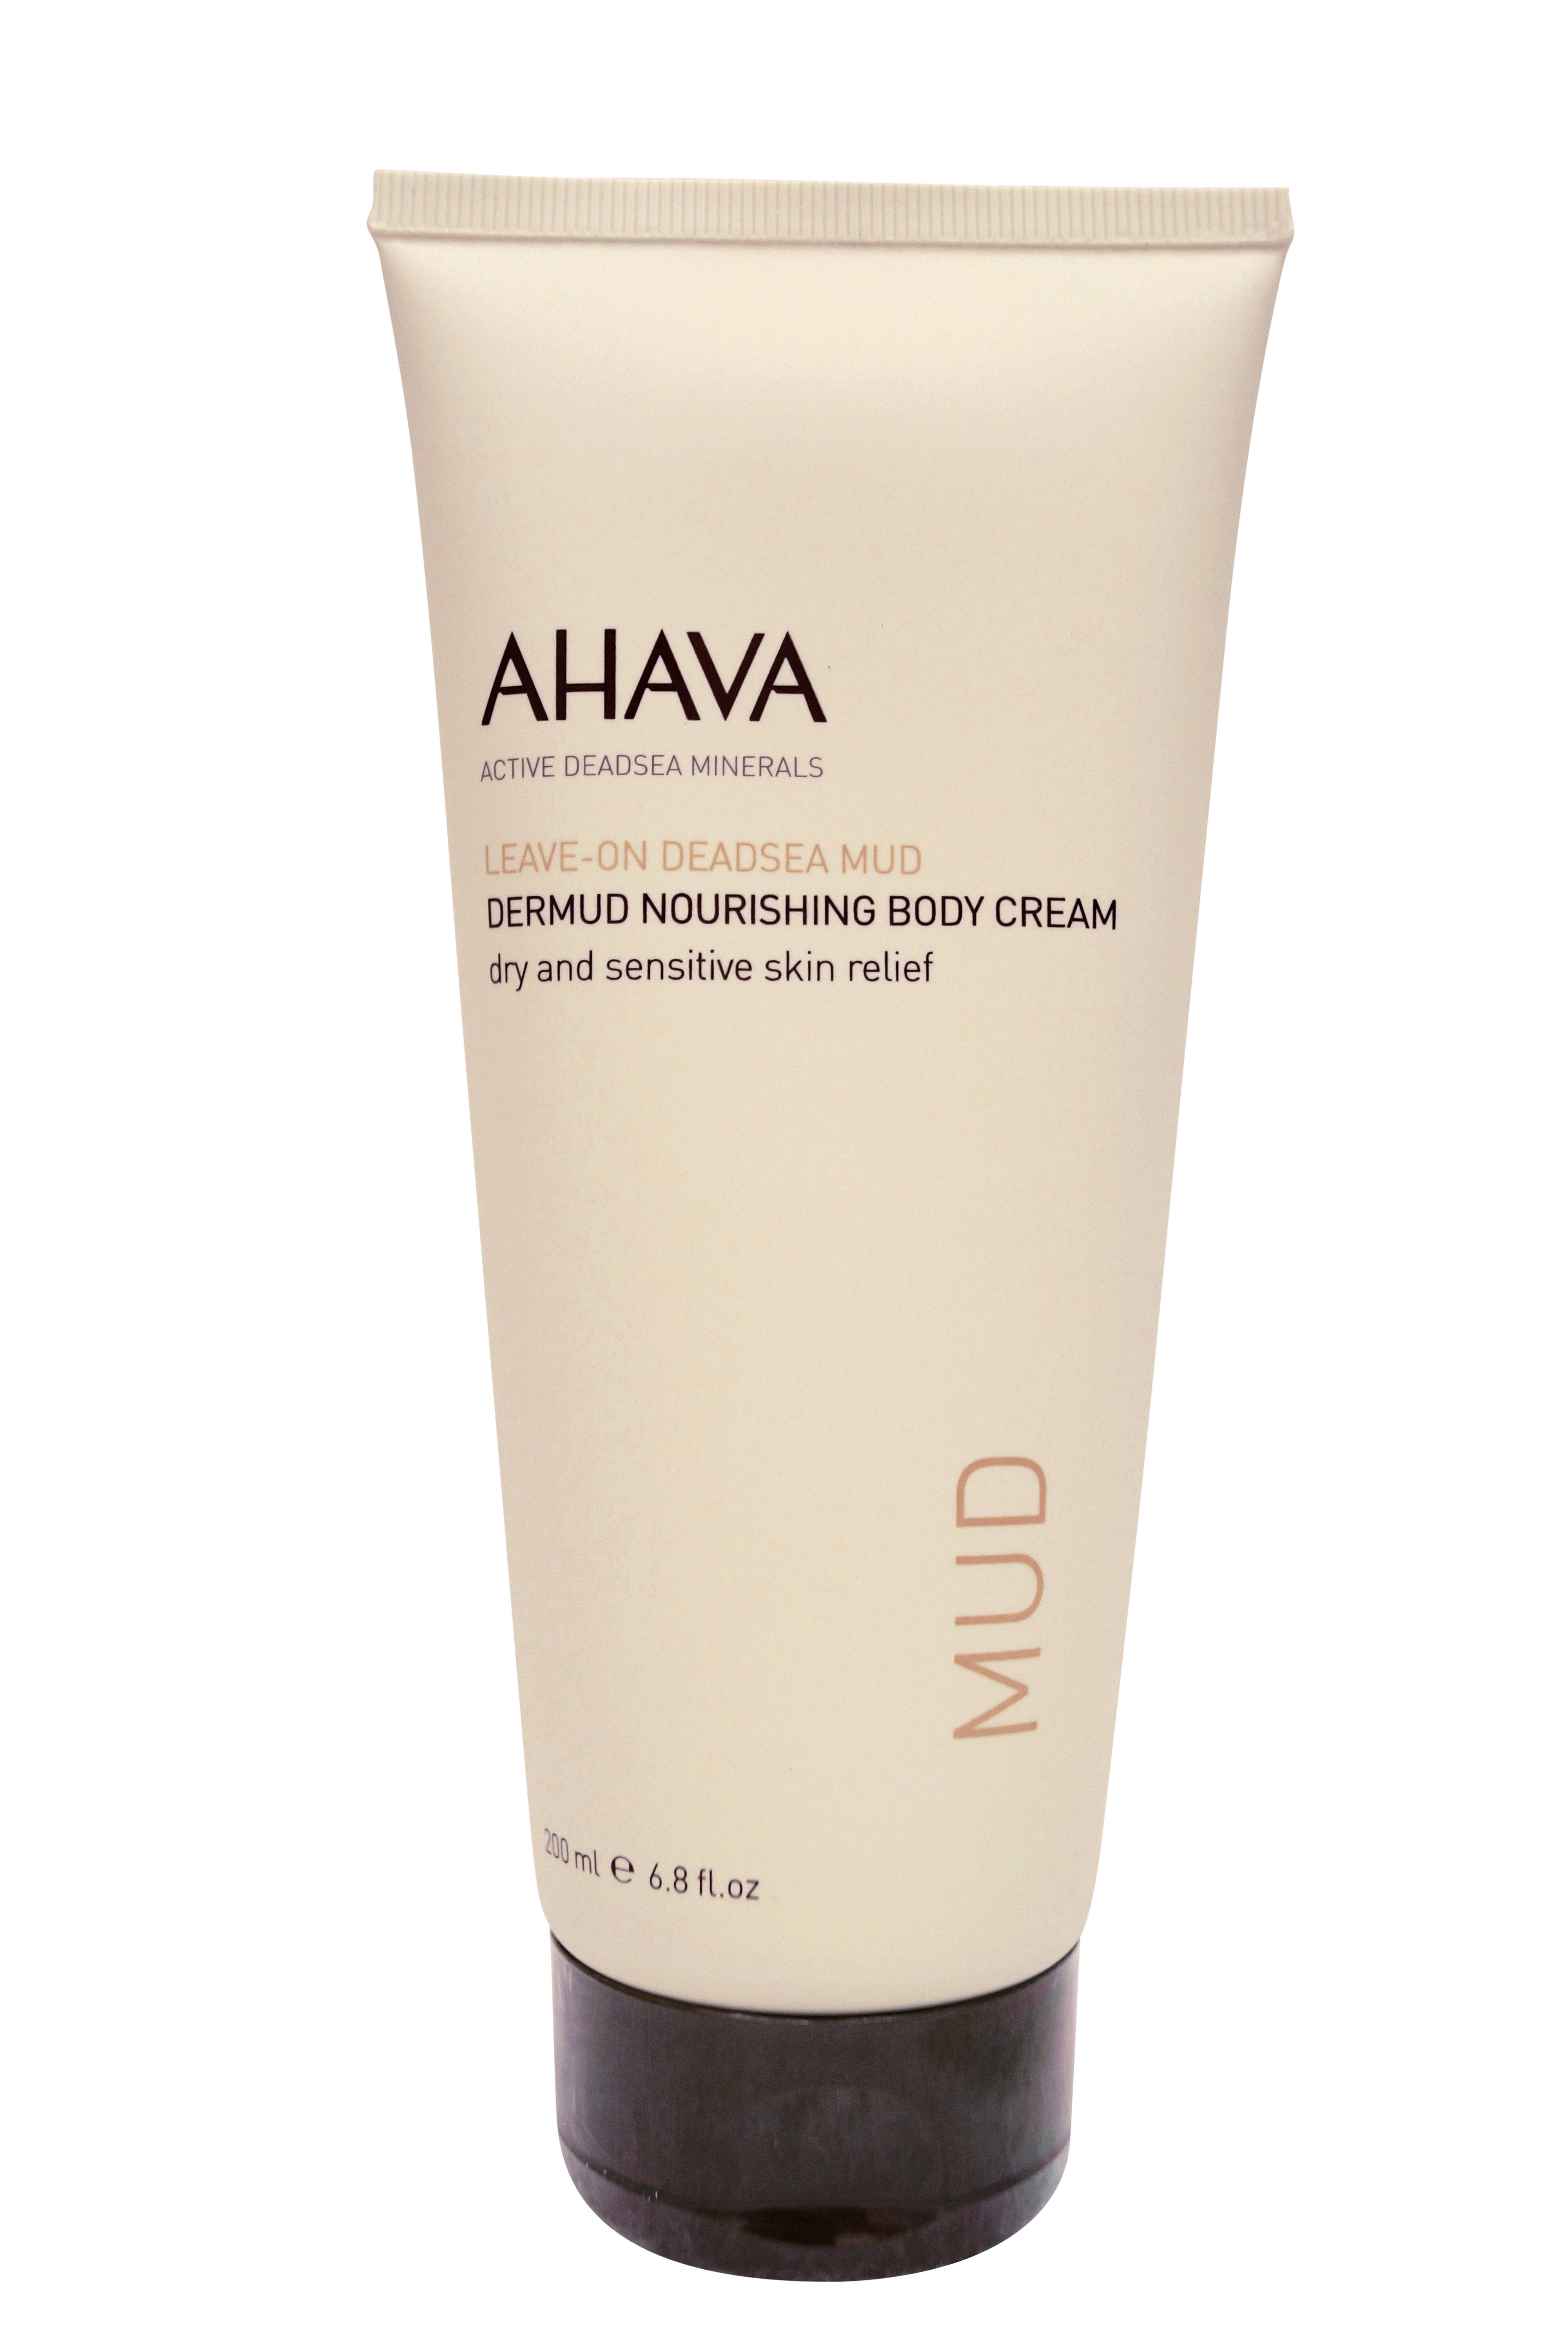 Ahava Dead Sea Mud Dermud Nourishing Body Cream - 200ml